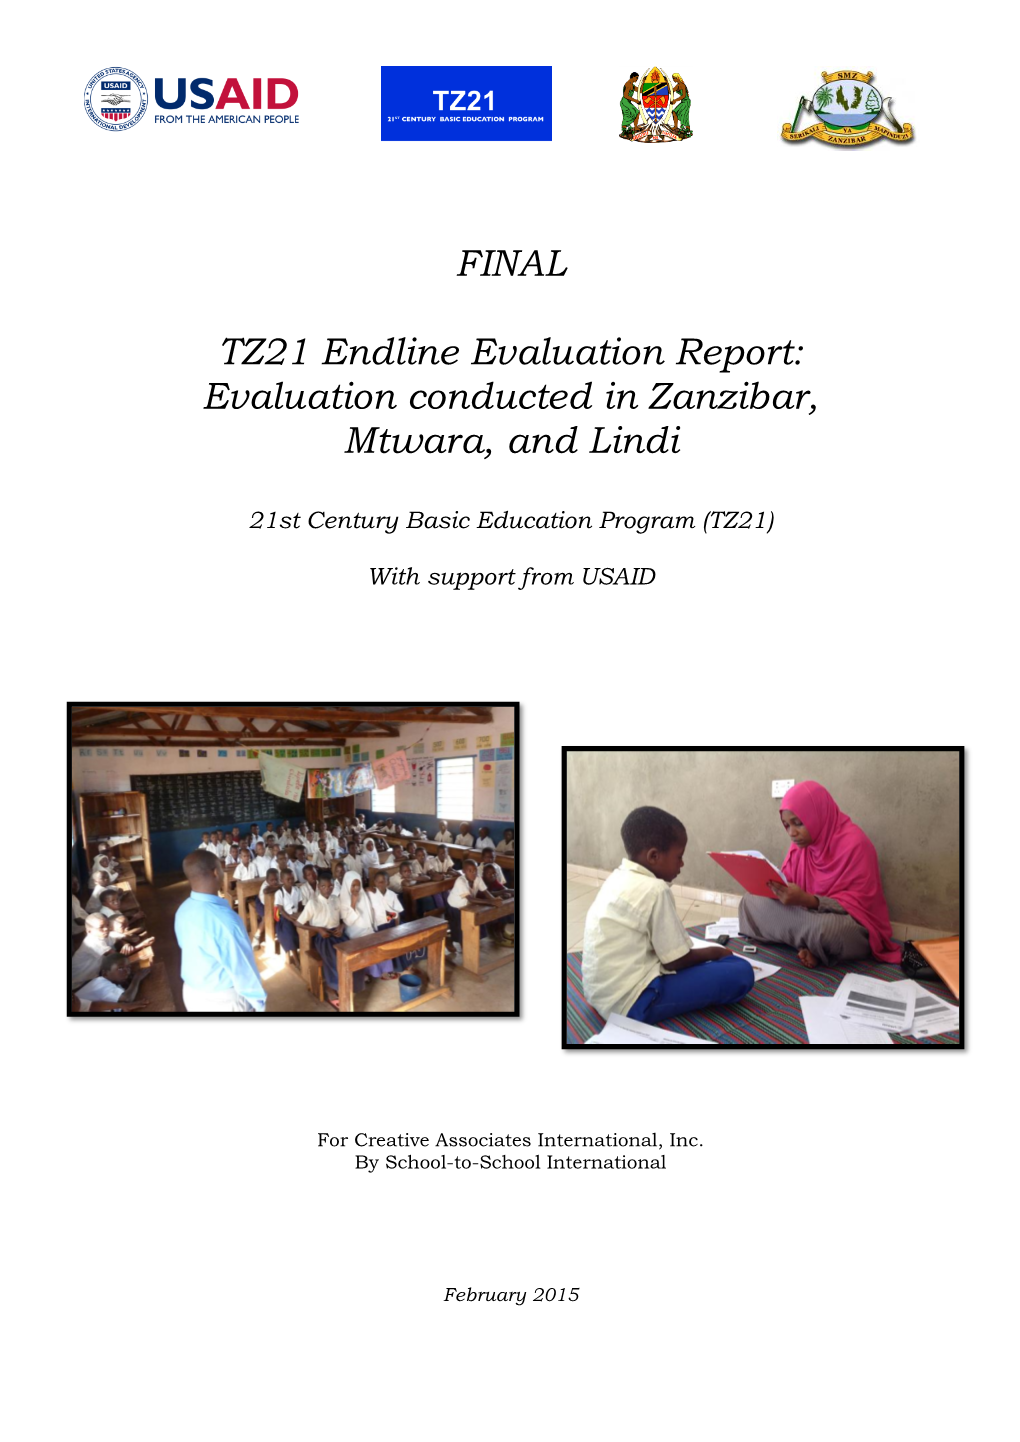 Evaluation Conducted in Zanzibar, Mtwara, and Lindi